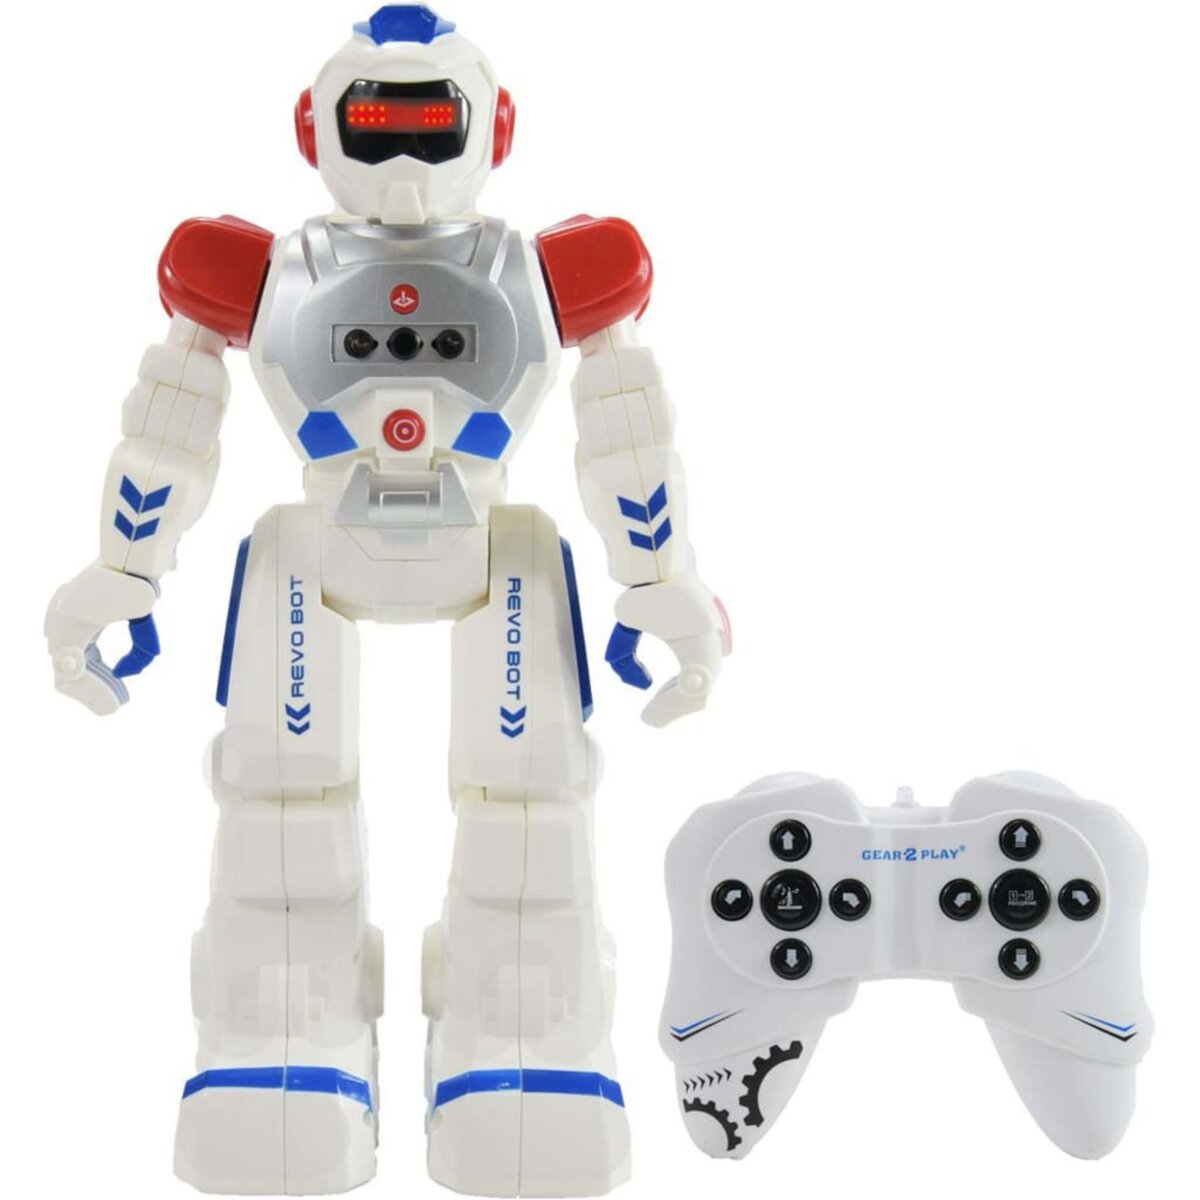 Gear2Play Robot telecommande Revo Bot pas cher 